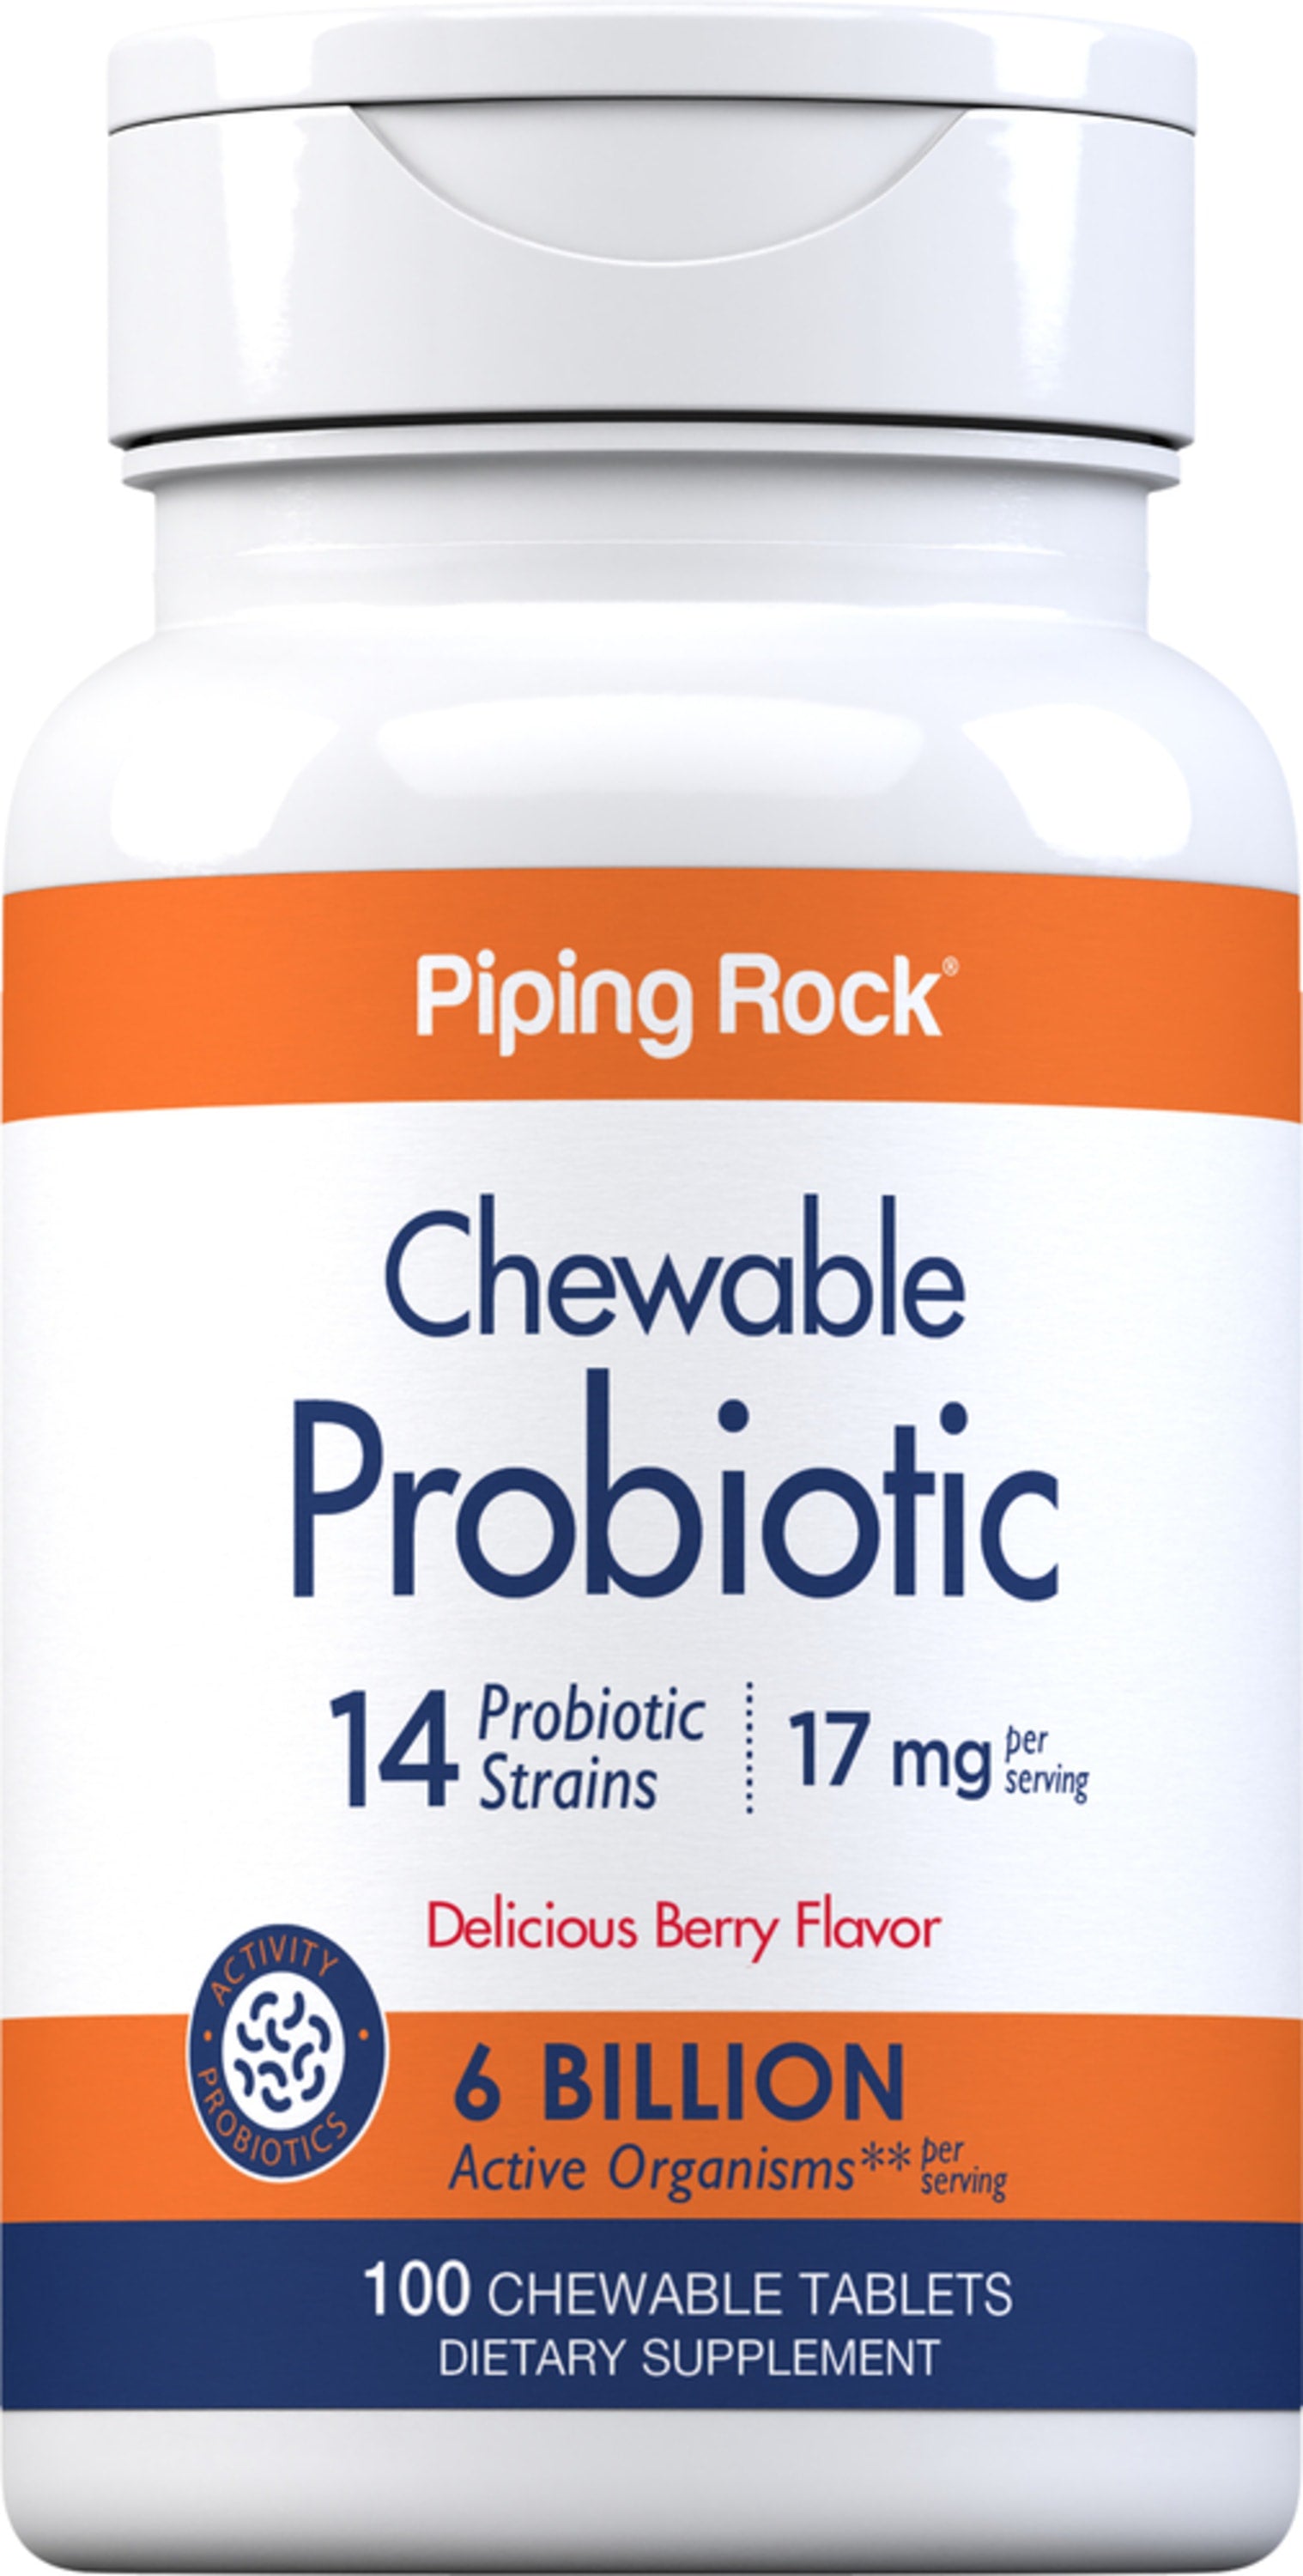 Chewable Probiotic 14 Strains 6 Billion Organisms (Berry), 100 Chewable Tablets